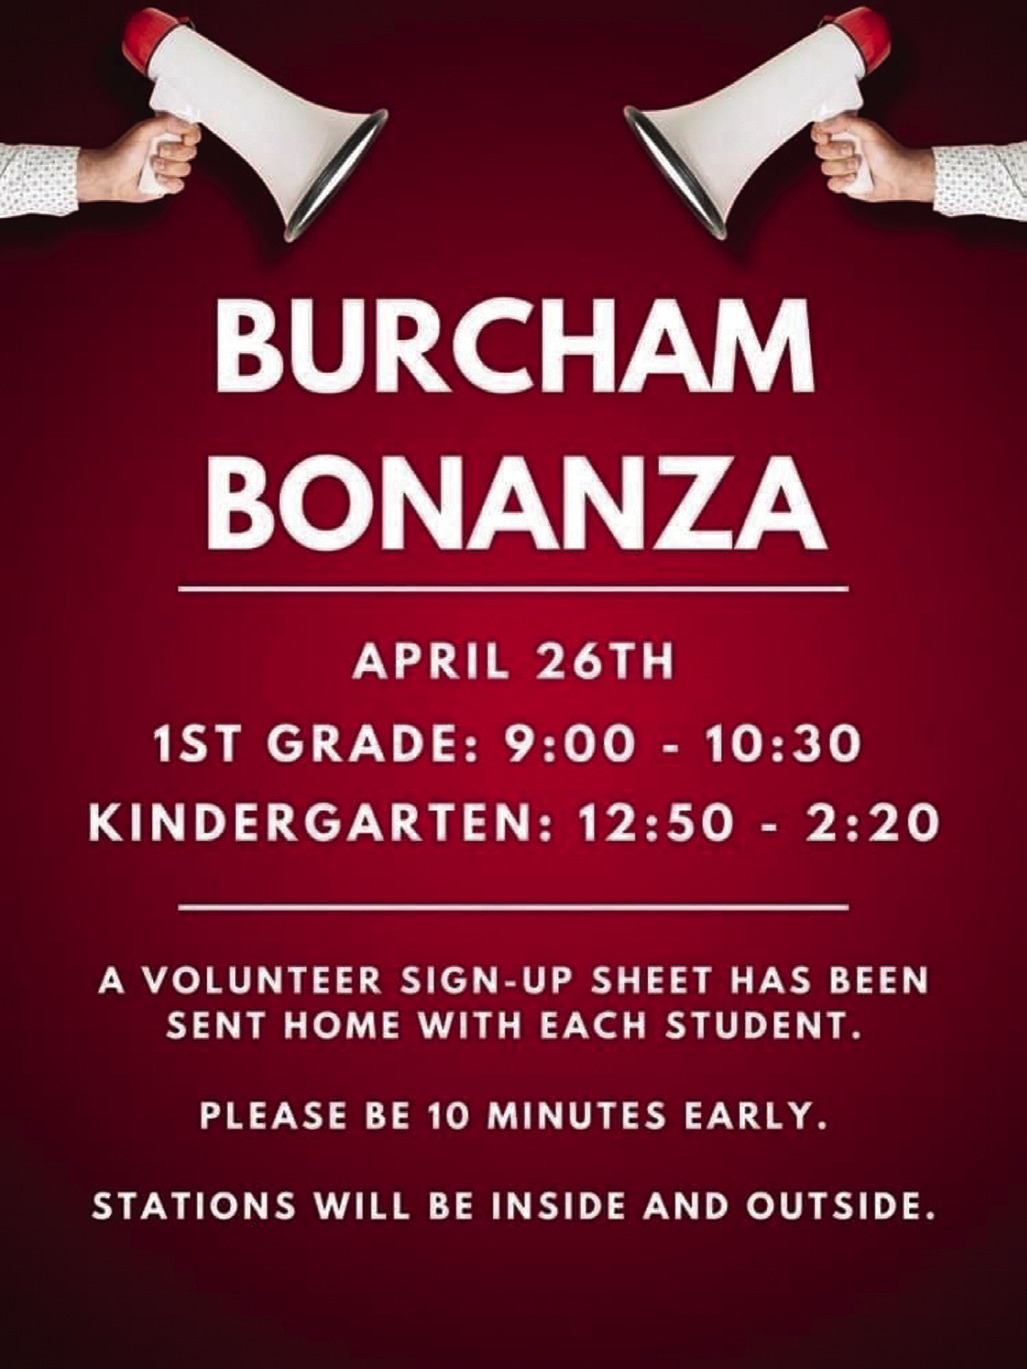 ► Burcham Elementary will host Burcham Bonanza Friday.